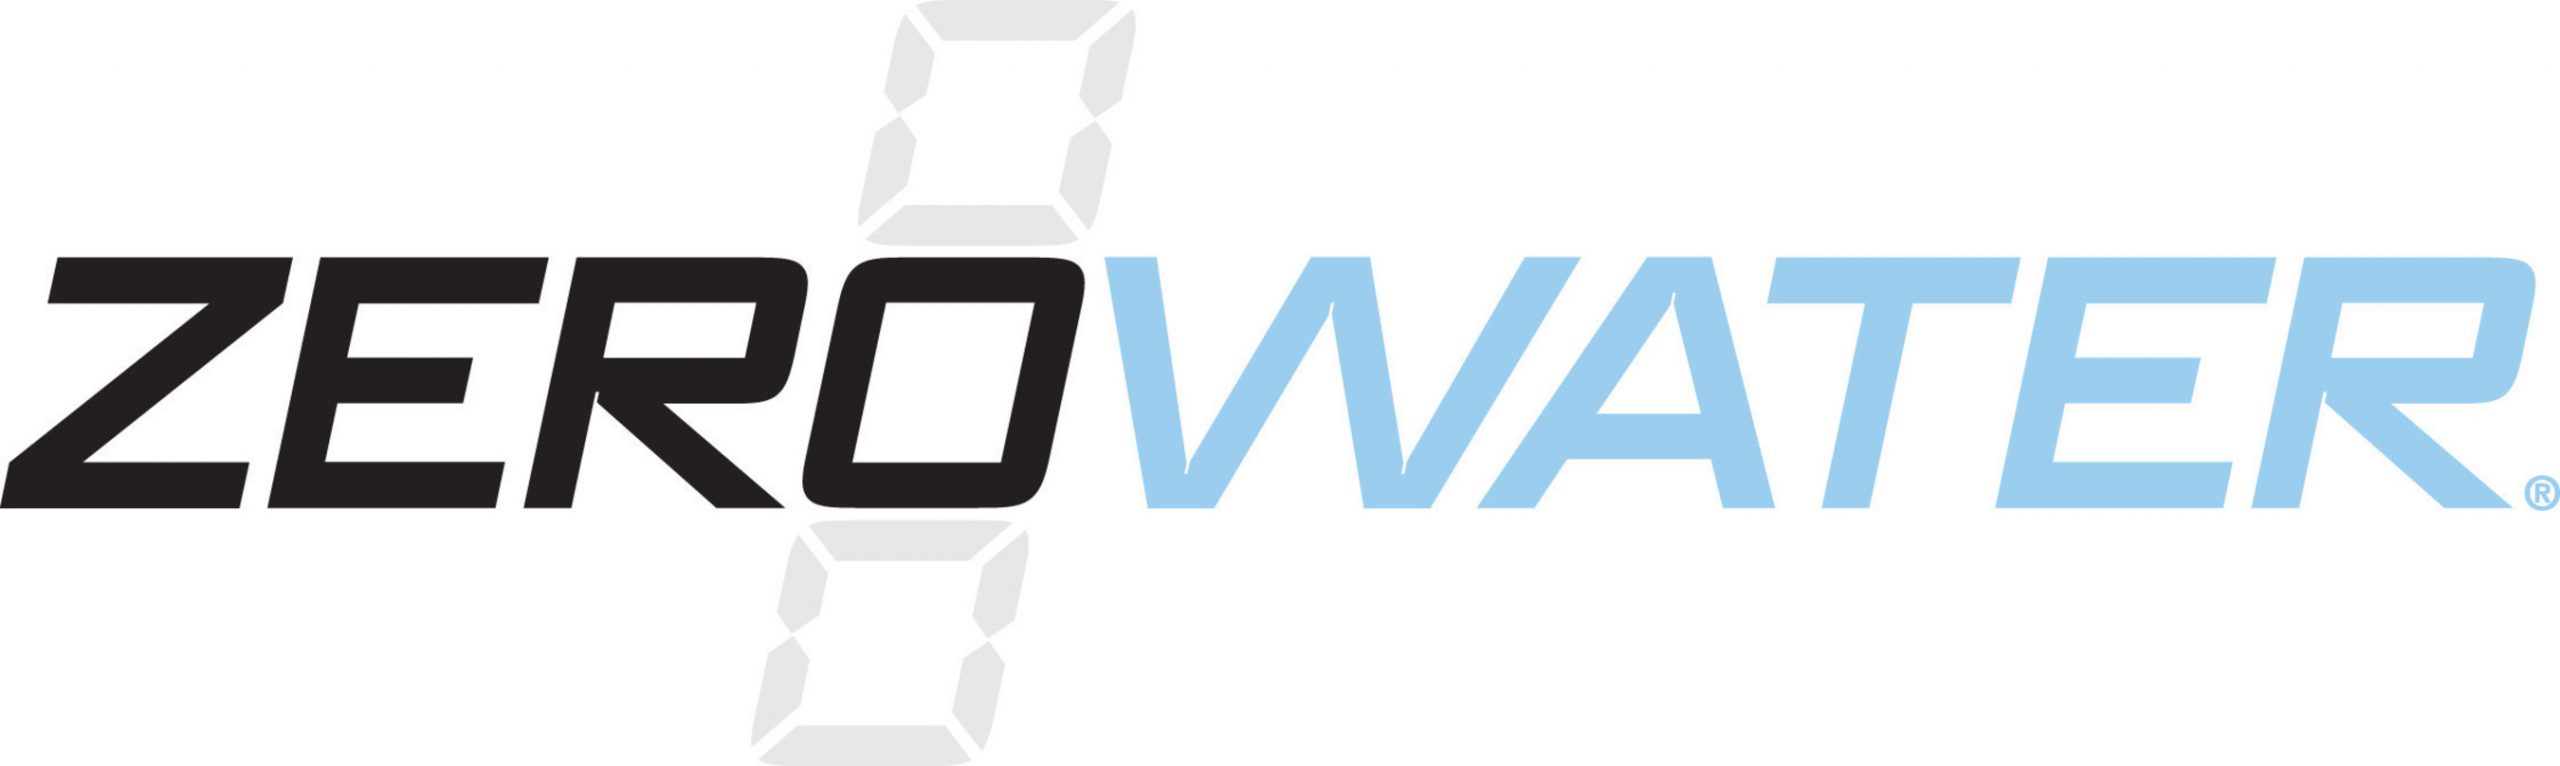 zerowater logo